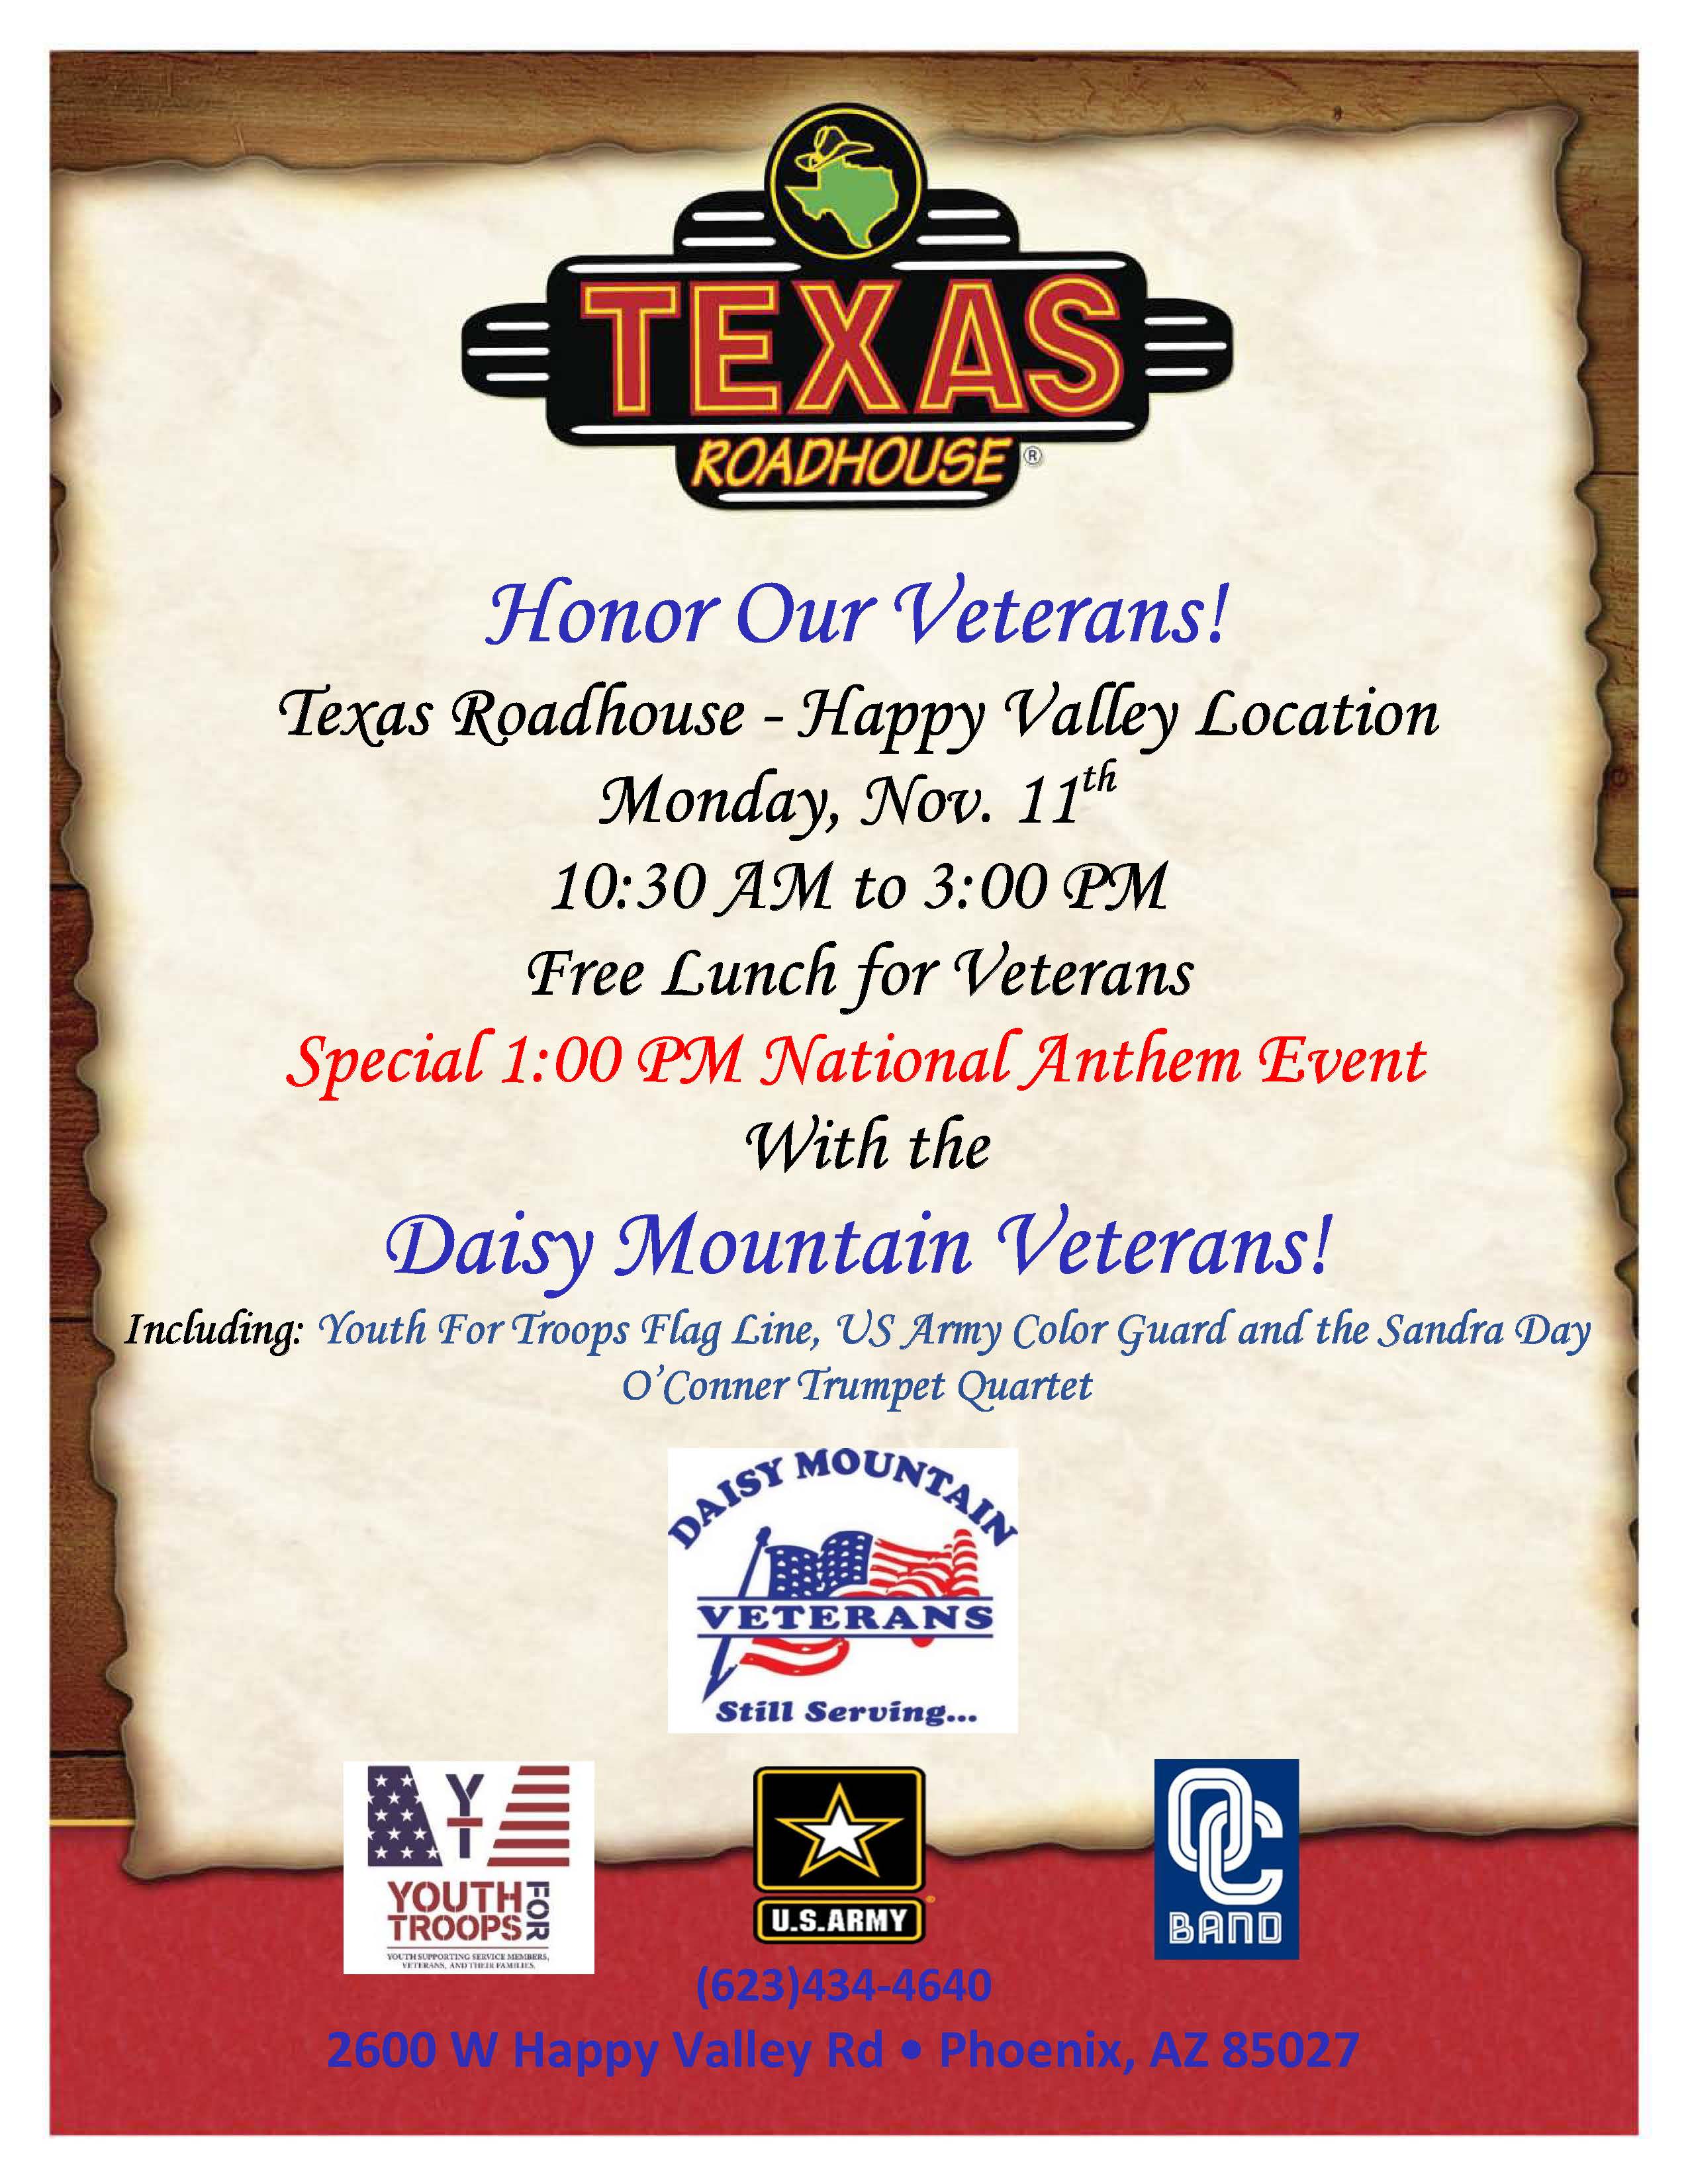 Home - Daisy Mountain Veterans : Daisy Mountain Veterans2550 x 3300